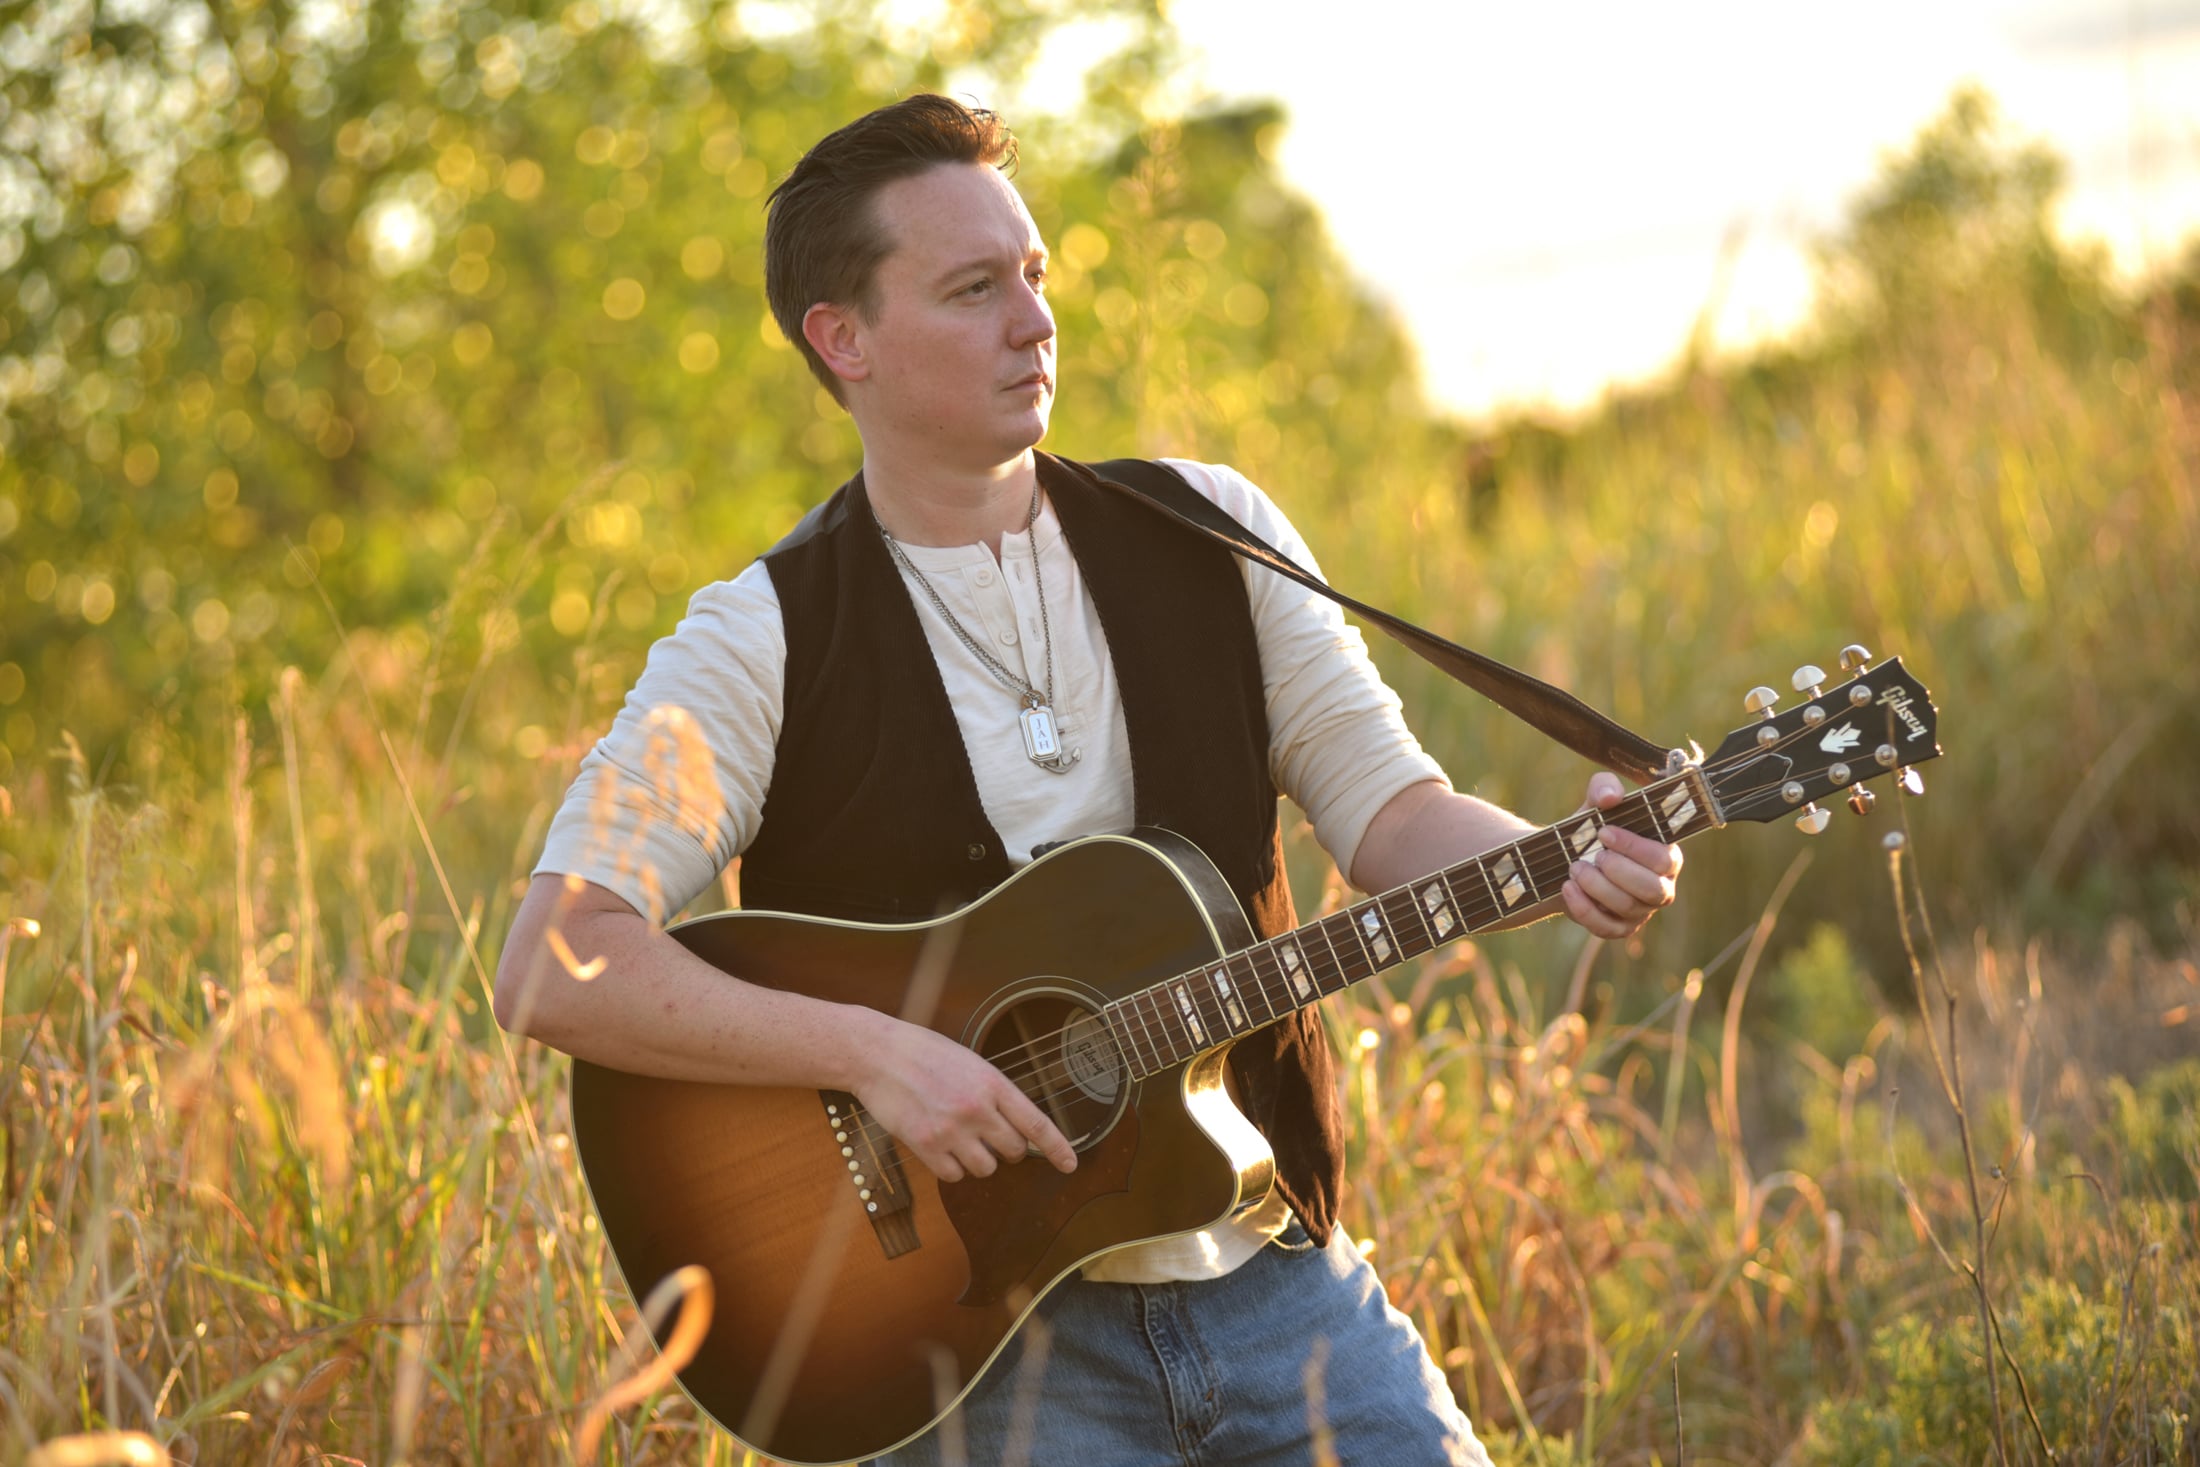 Oklahoma City musician tells complex story through song - Potawatomi.org